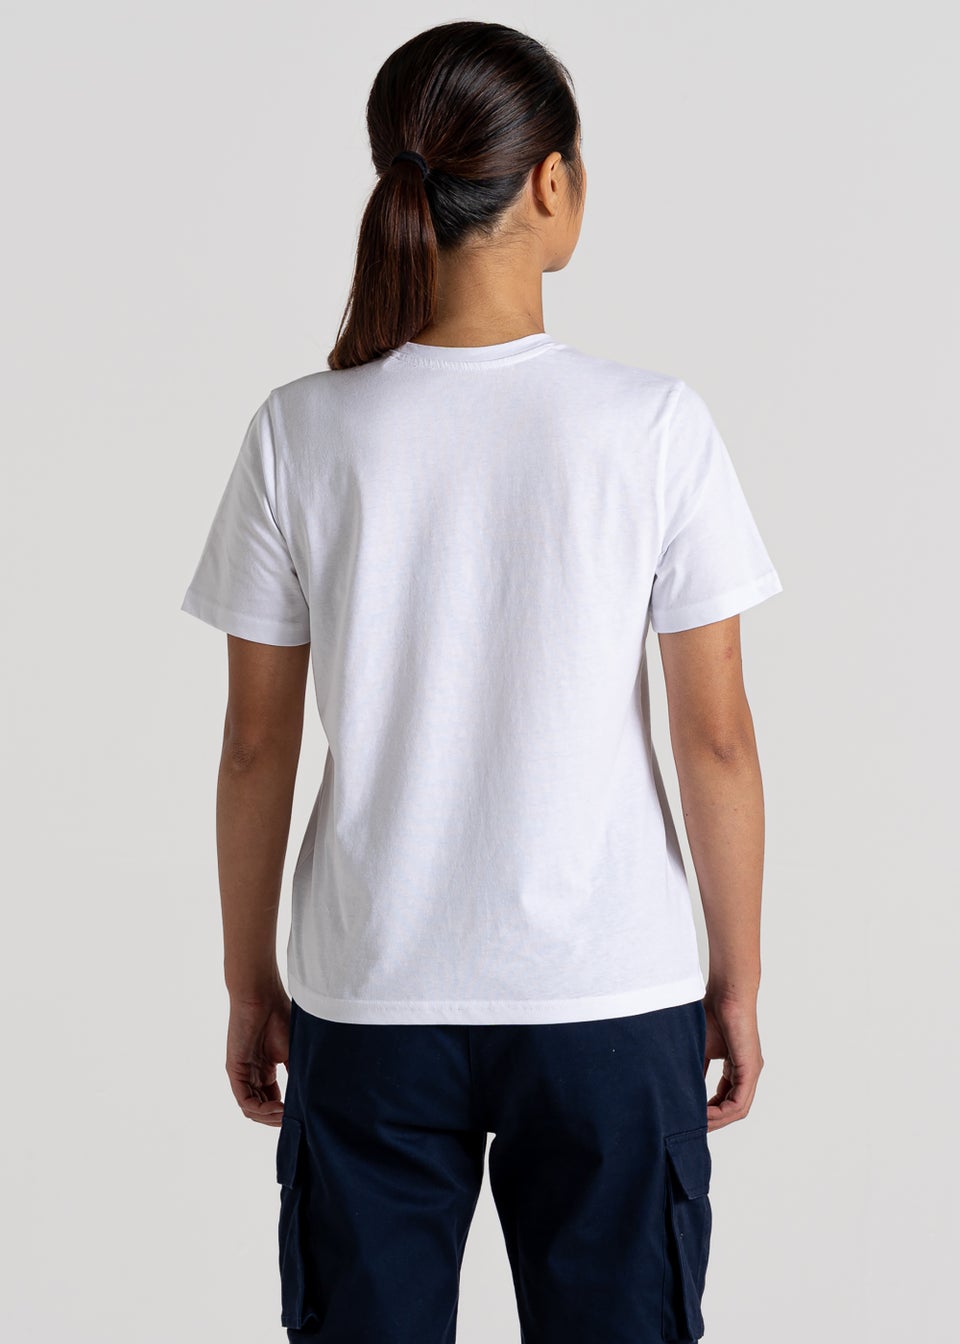 Craghoppers White Malibo T-Shirt - Matalan